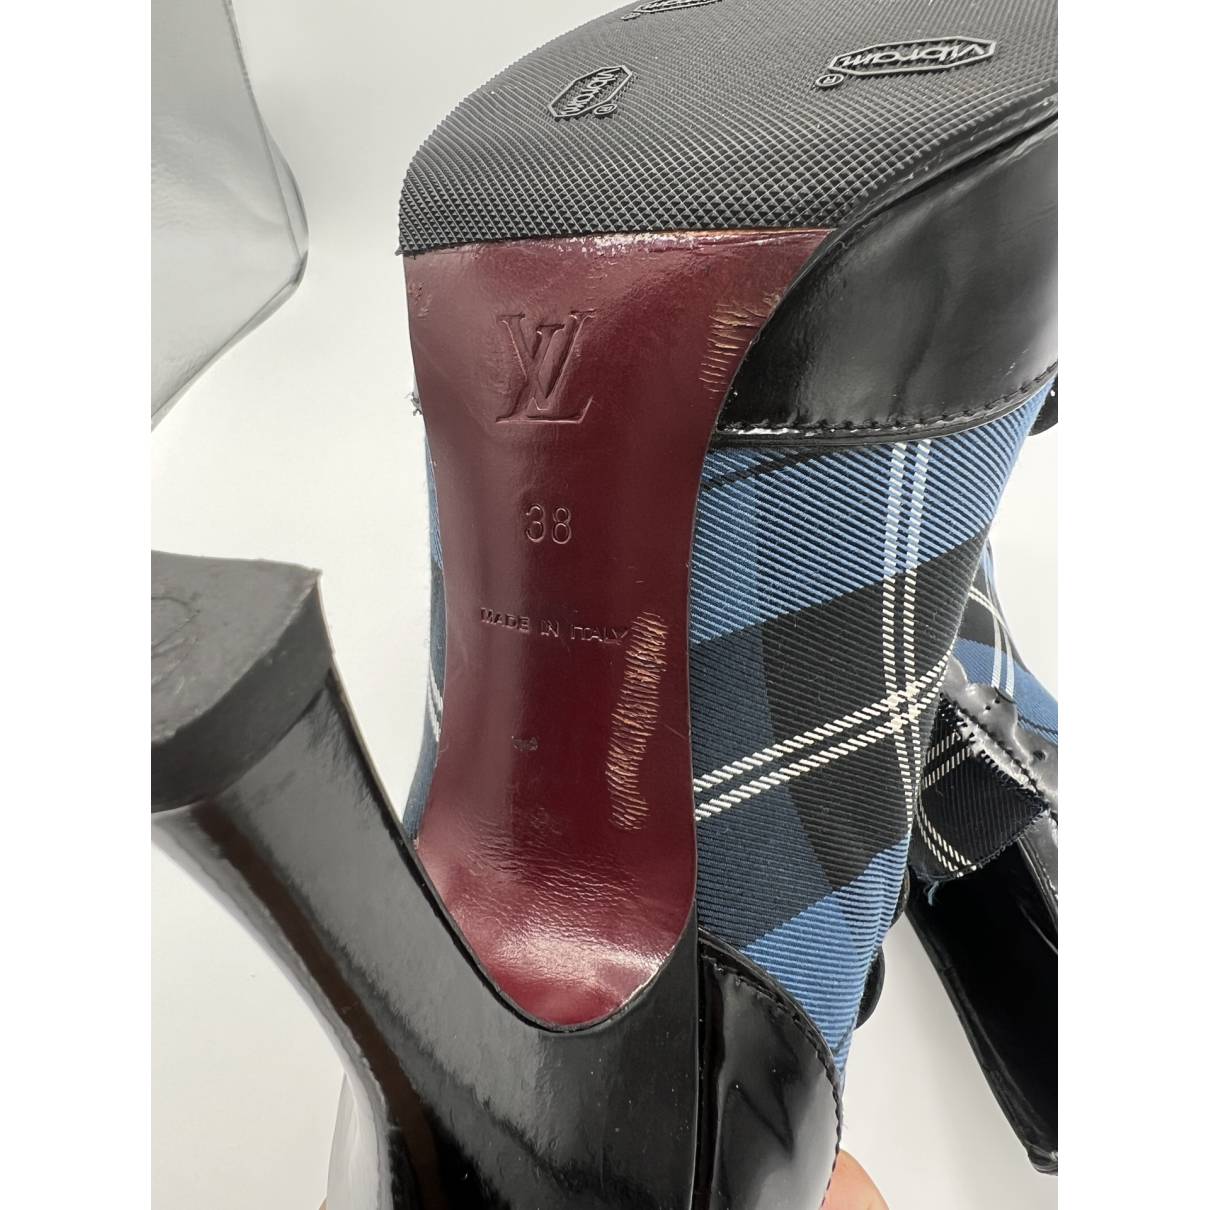 Louis Vuitton Streamline Patent Leather Heel